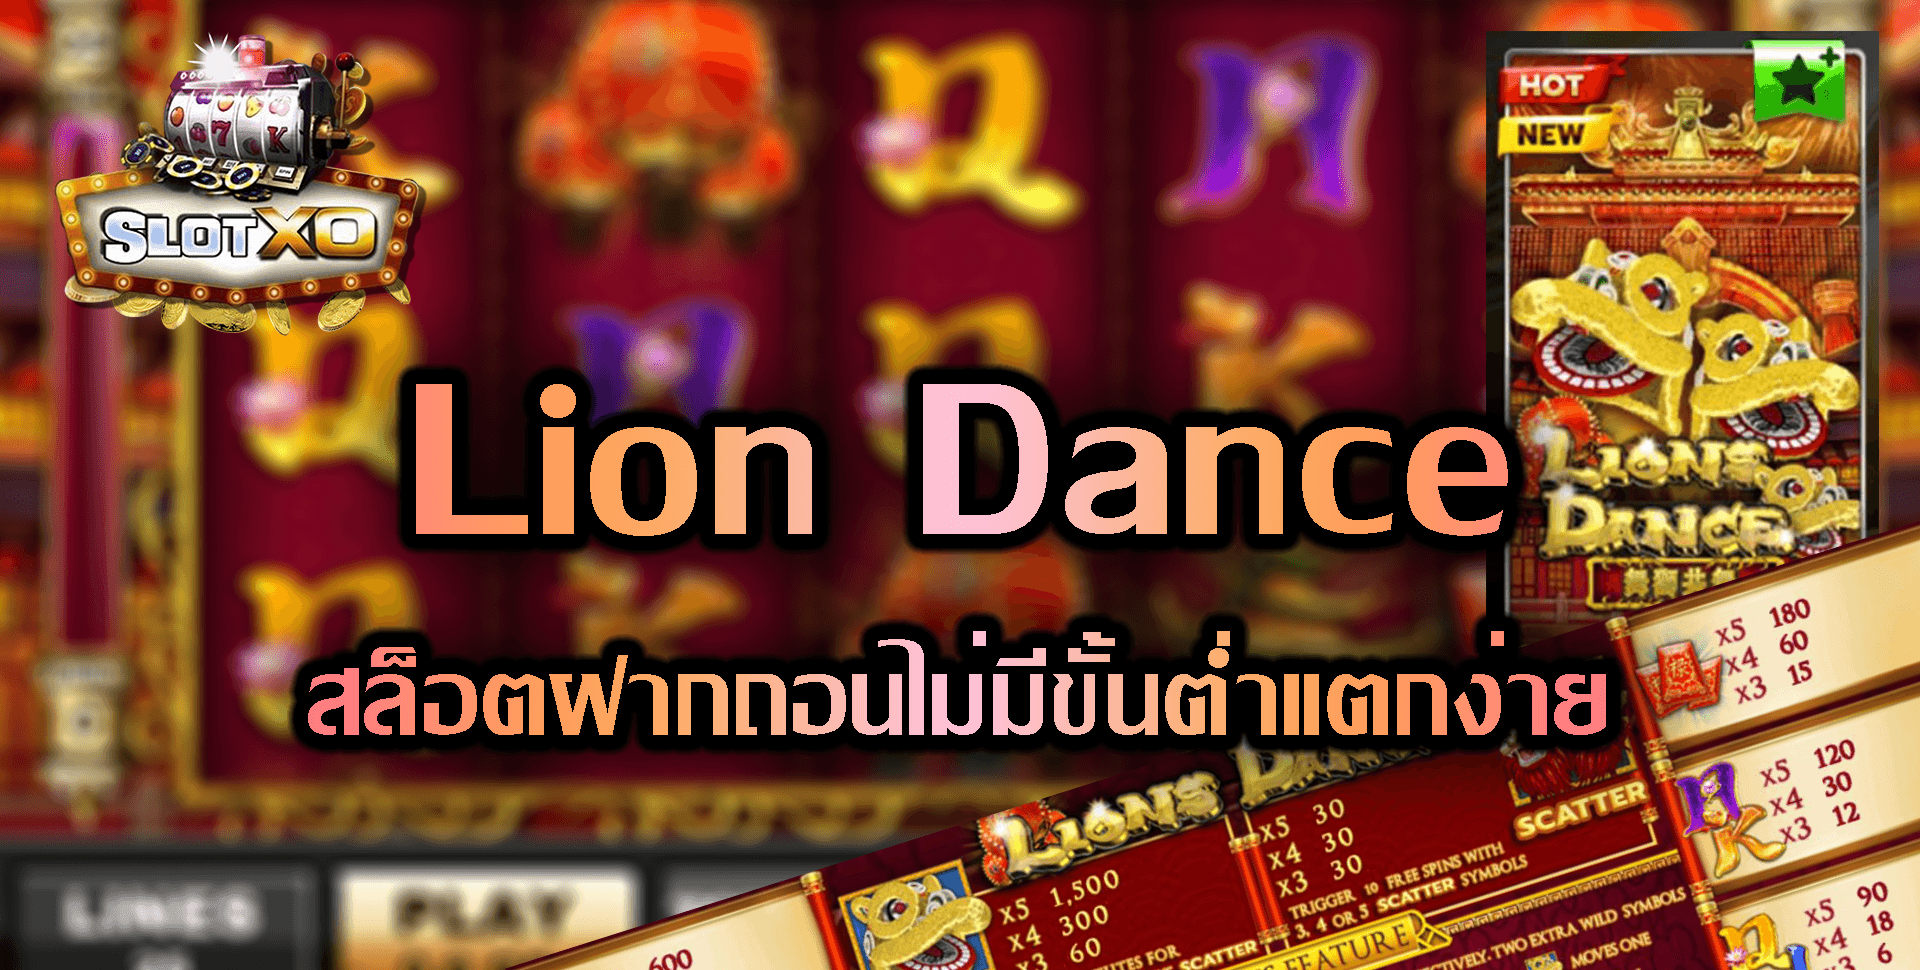 Slotxo-Slot xo-Lion-Dance-5